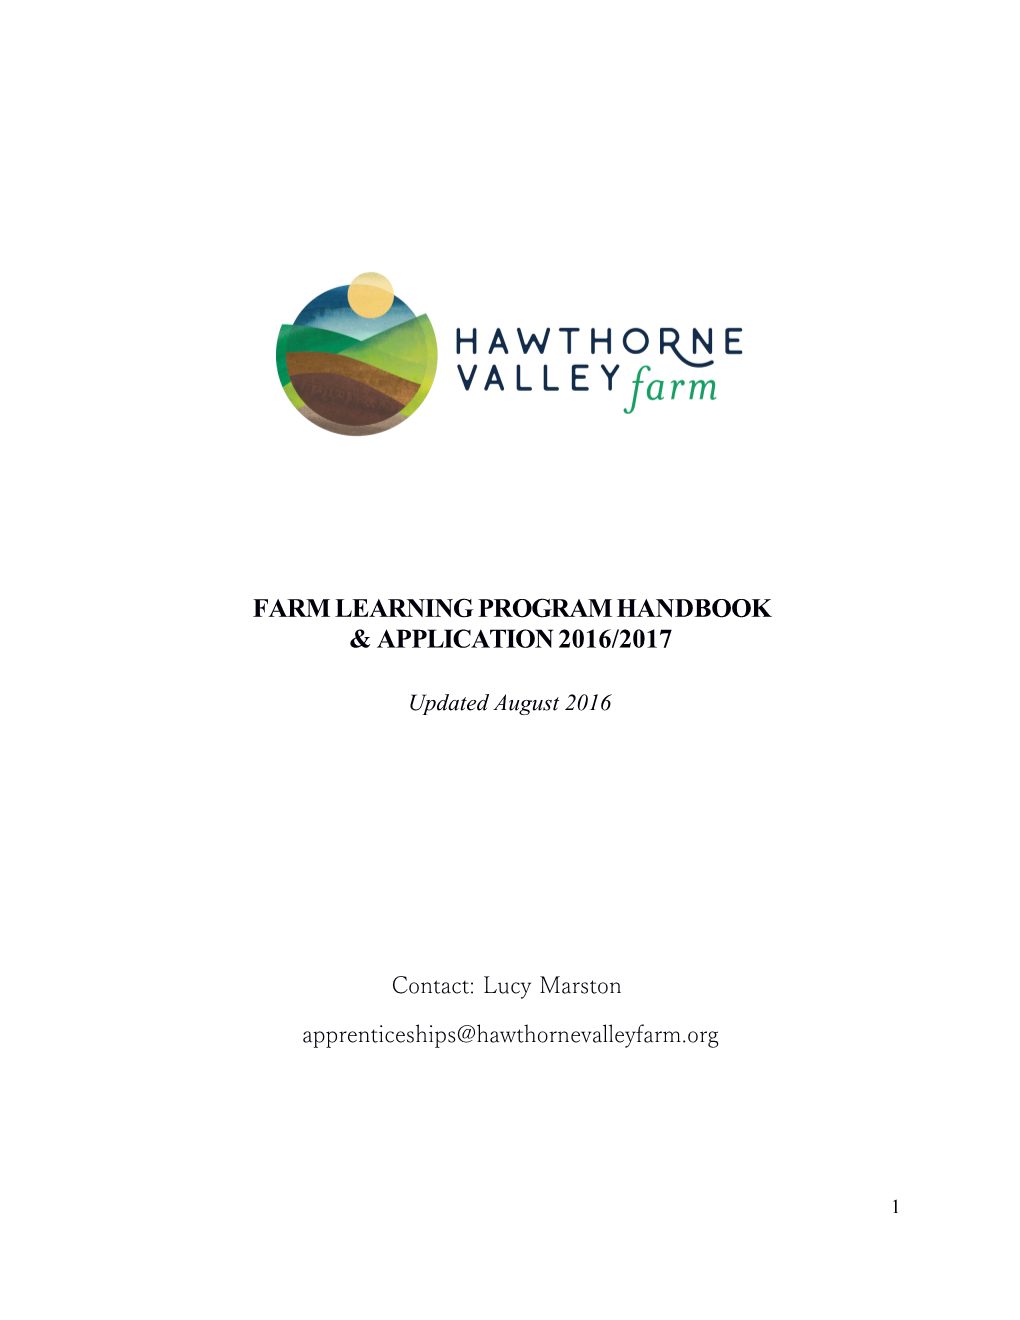 Hawthorne Valley Farm Apprentice Handbook